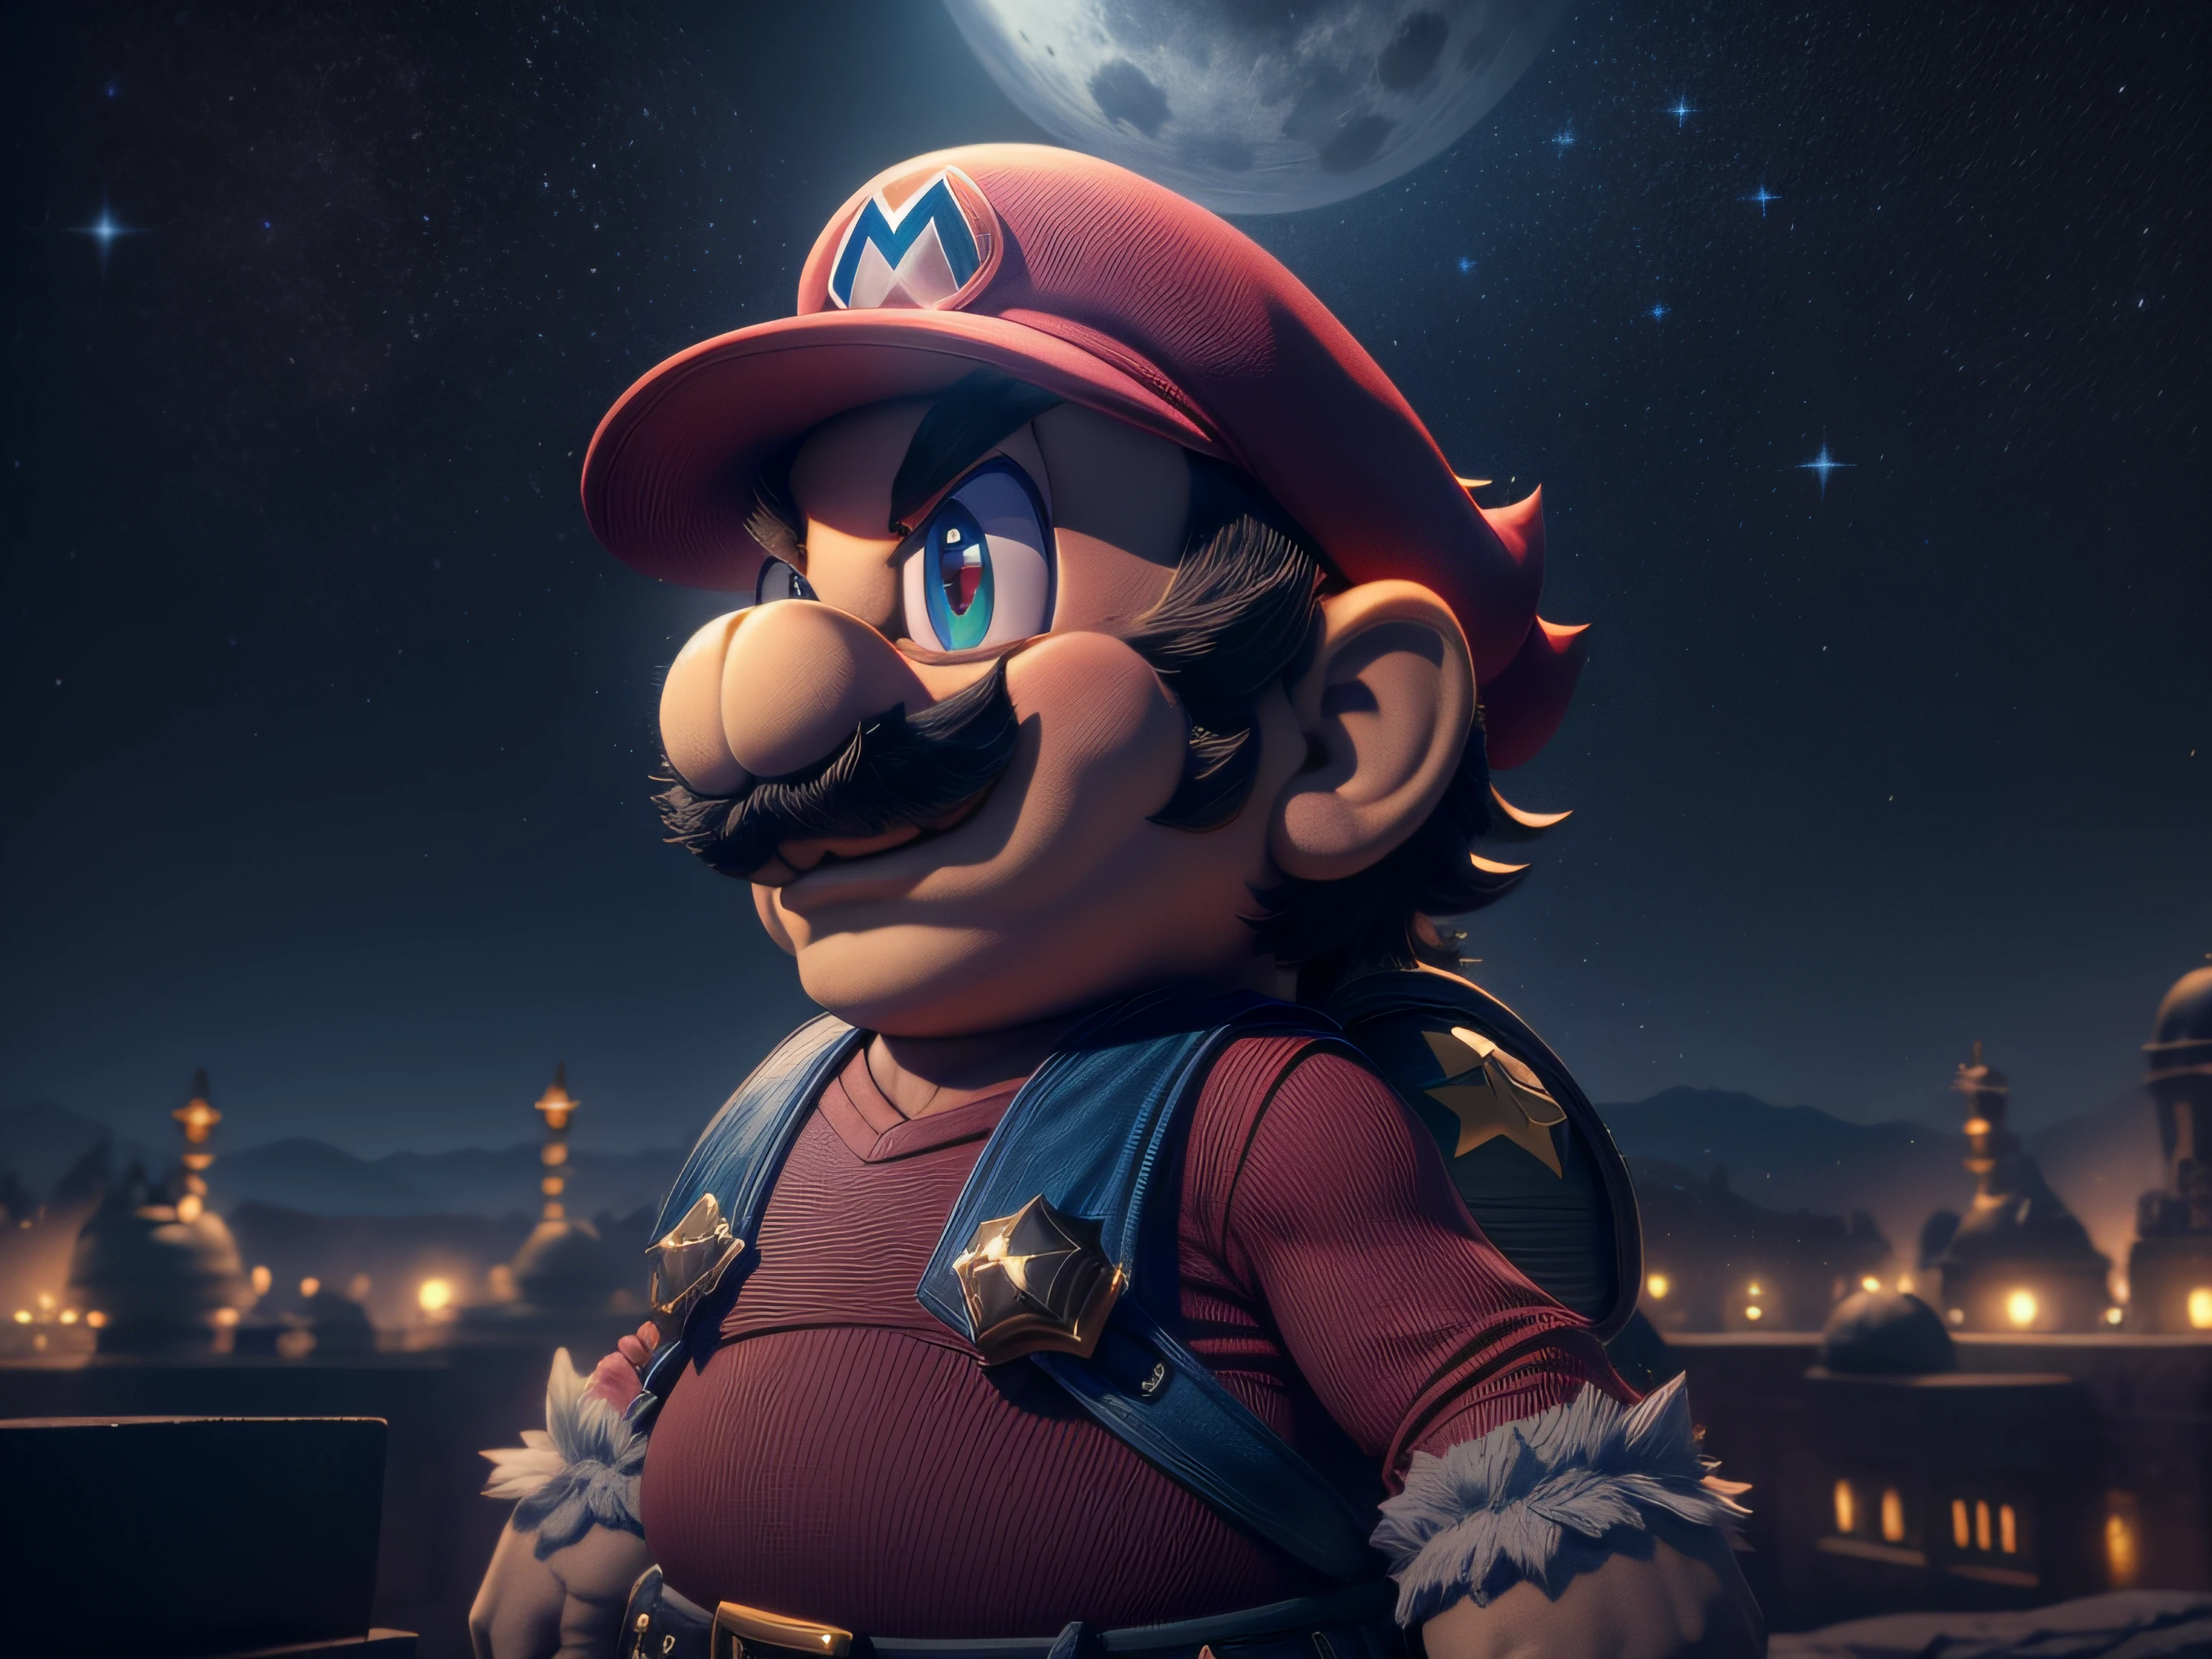 The imposing appearance of Super Mario Bros., menacing stare, ricamente detalhado, Hiper realista, 3D-rendering, obra-prima, NVIDIA, RTX, ray-traced, Bokeh, Night sky with a huge and beautiful full moon, estrelas brilhando,